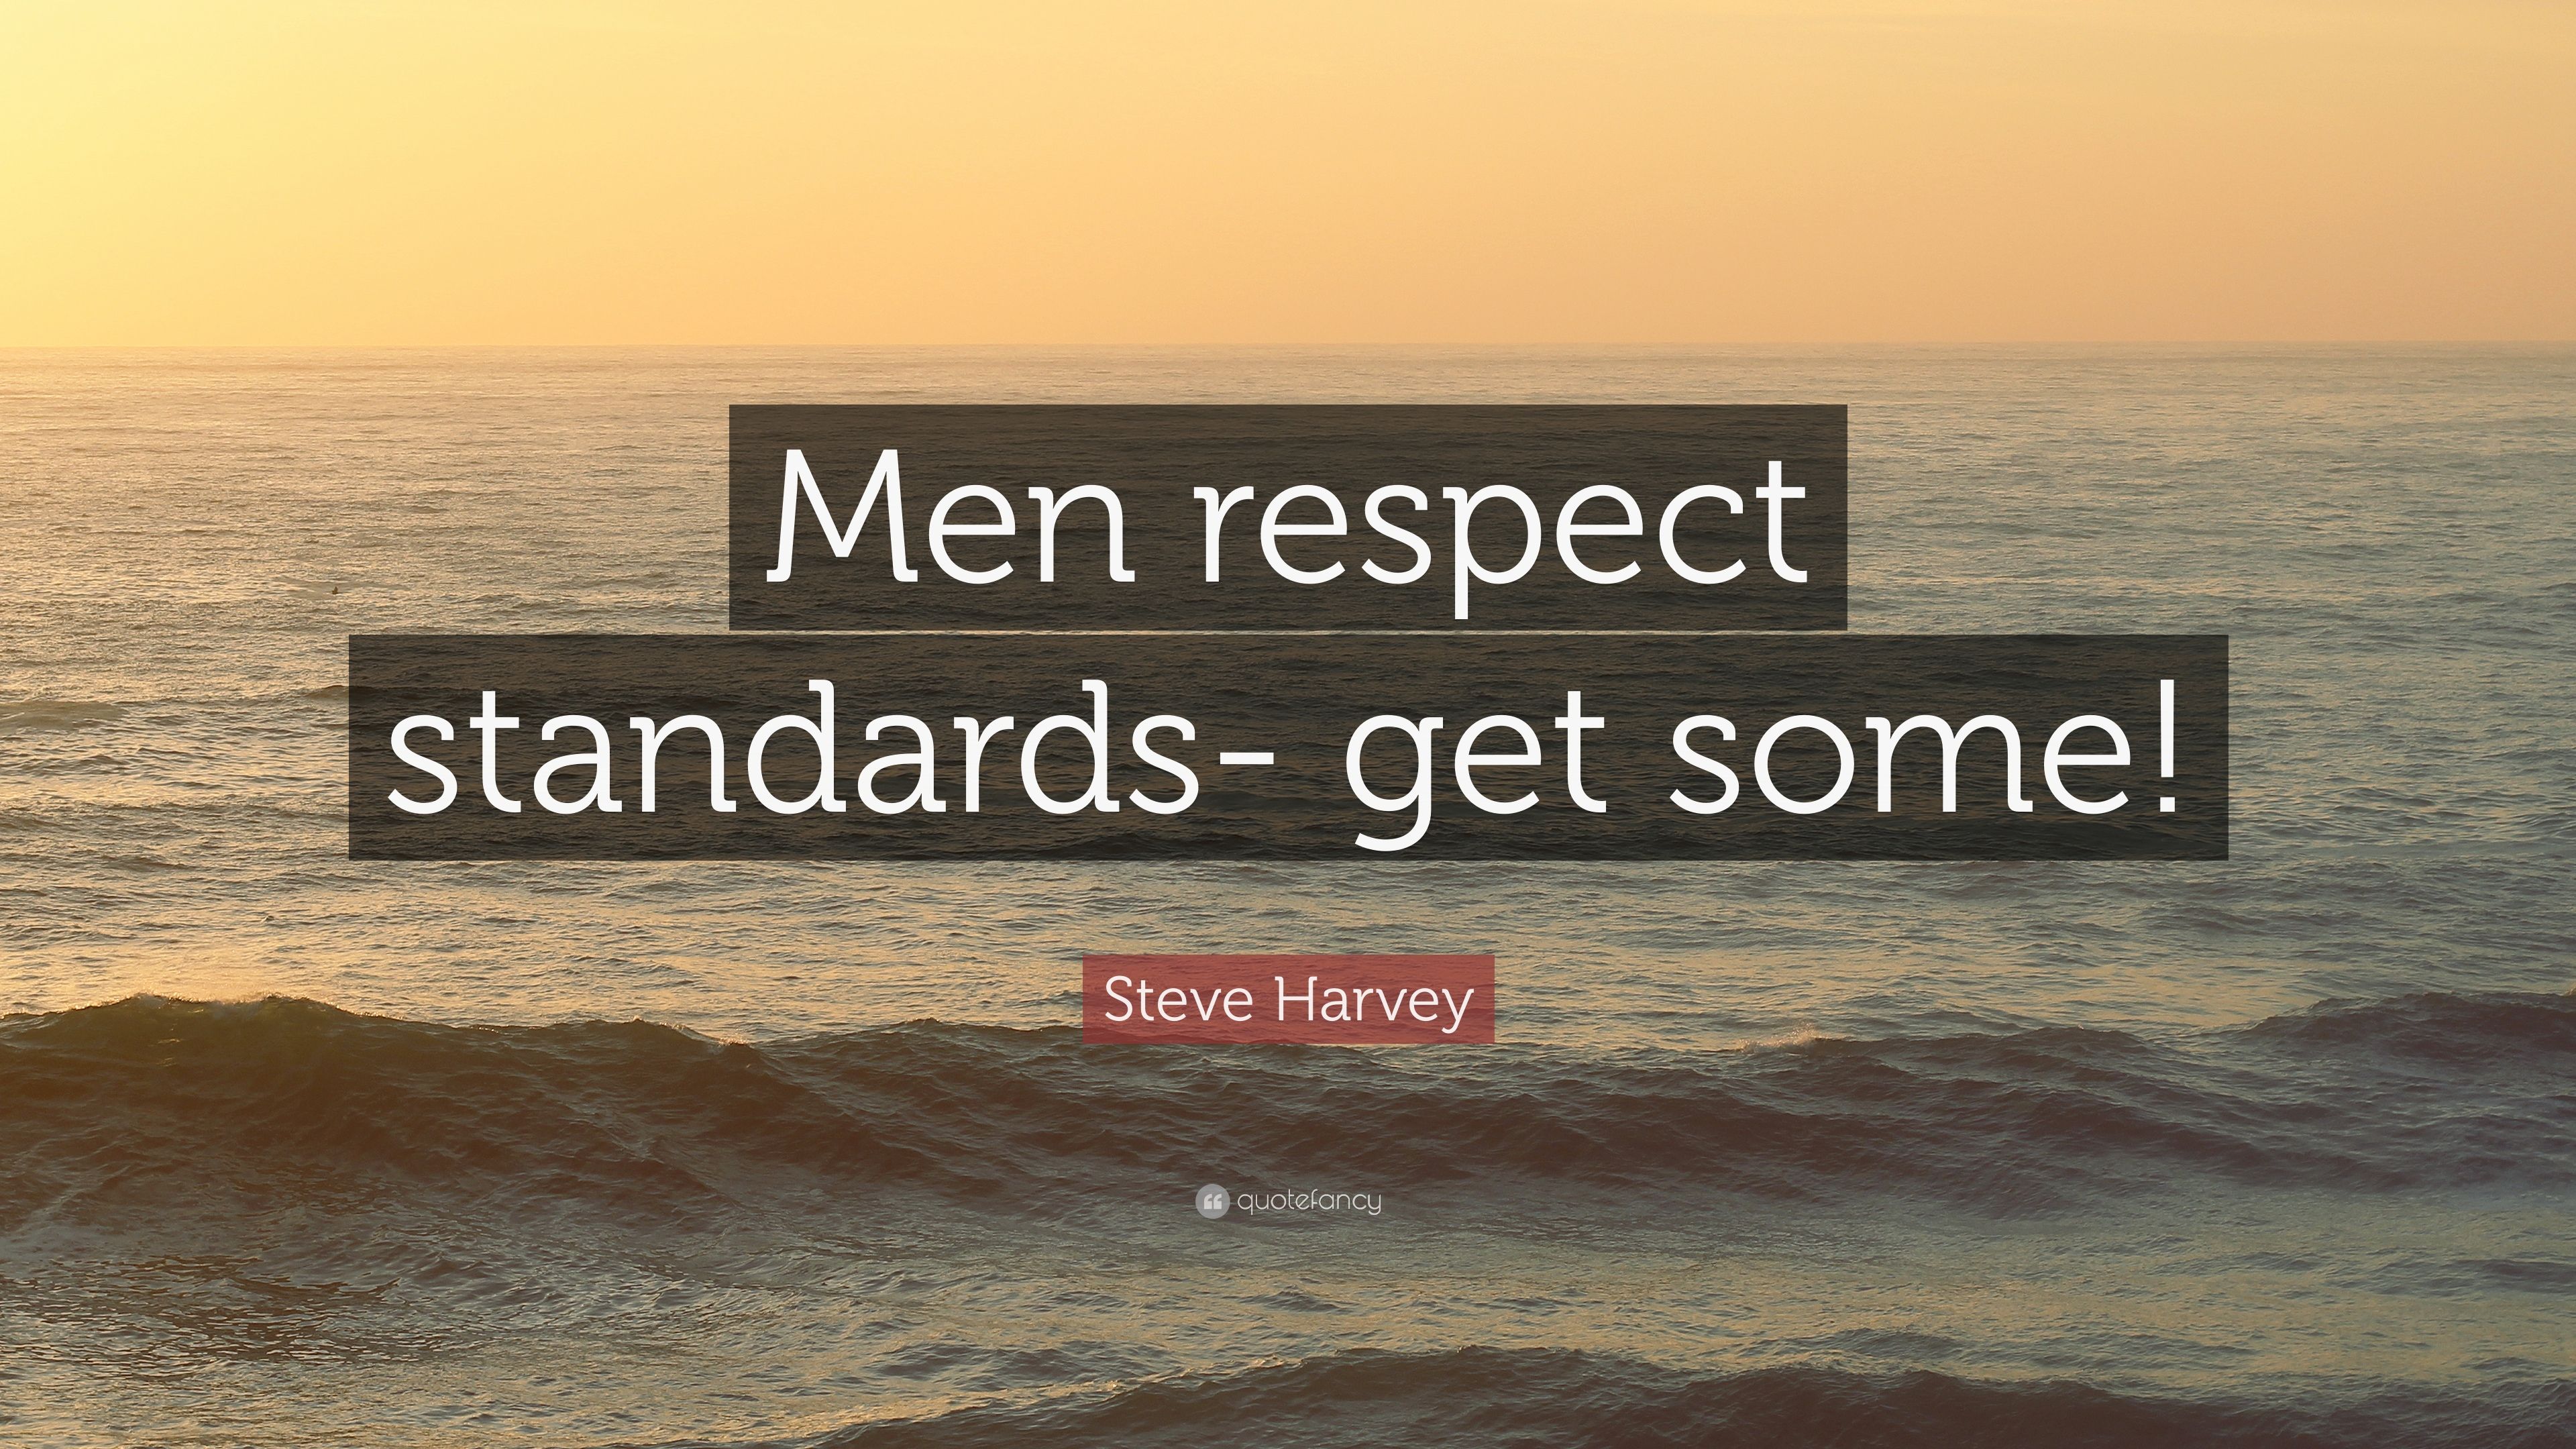 Steve Harvey Quote: “Men respect standards- get some!” 10